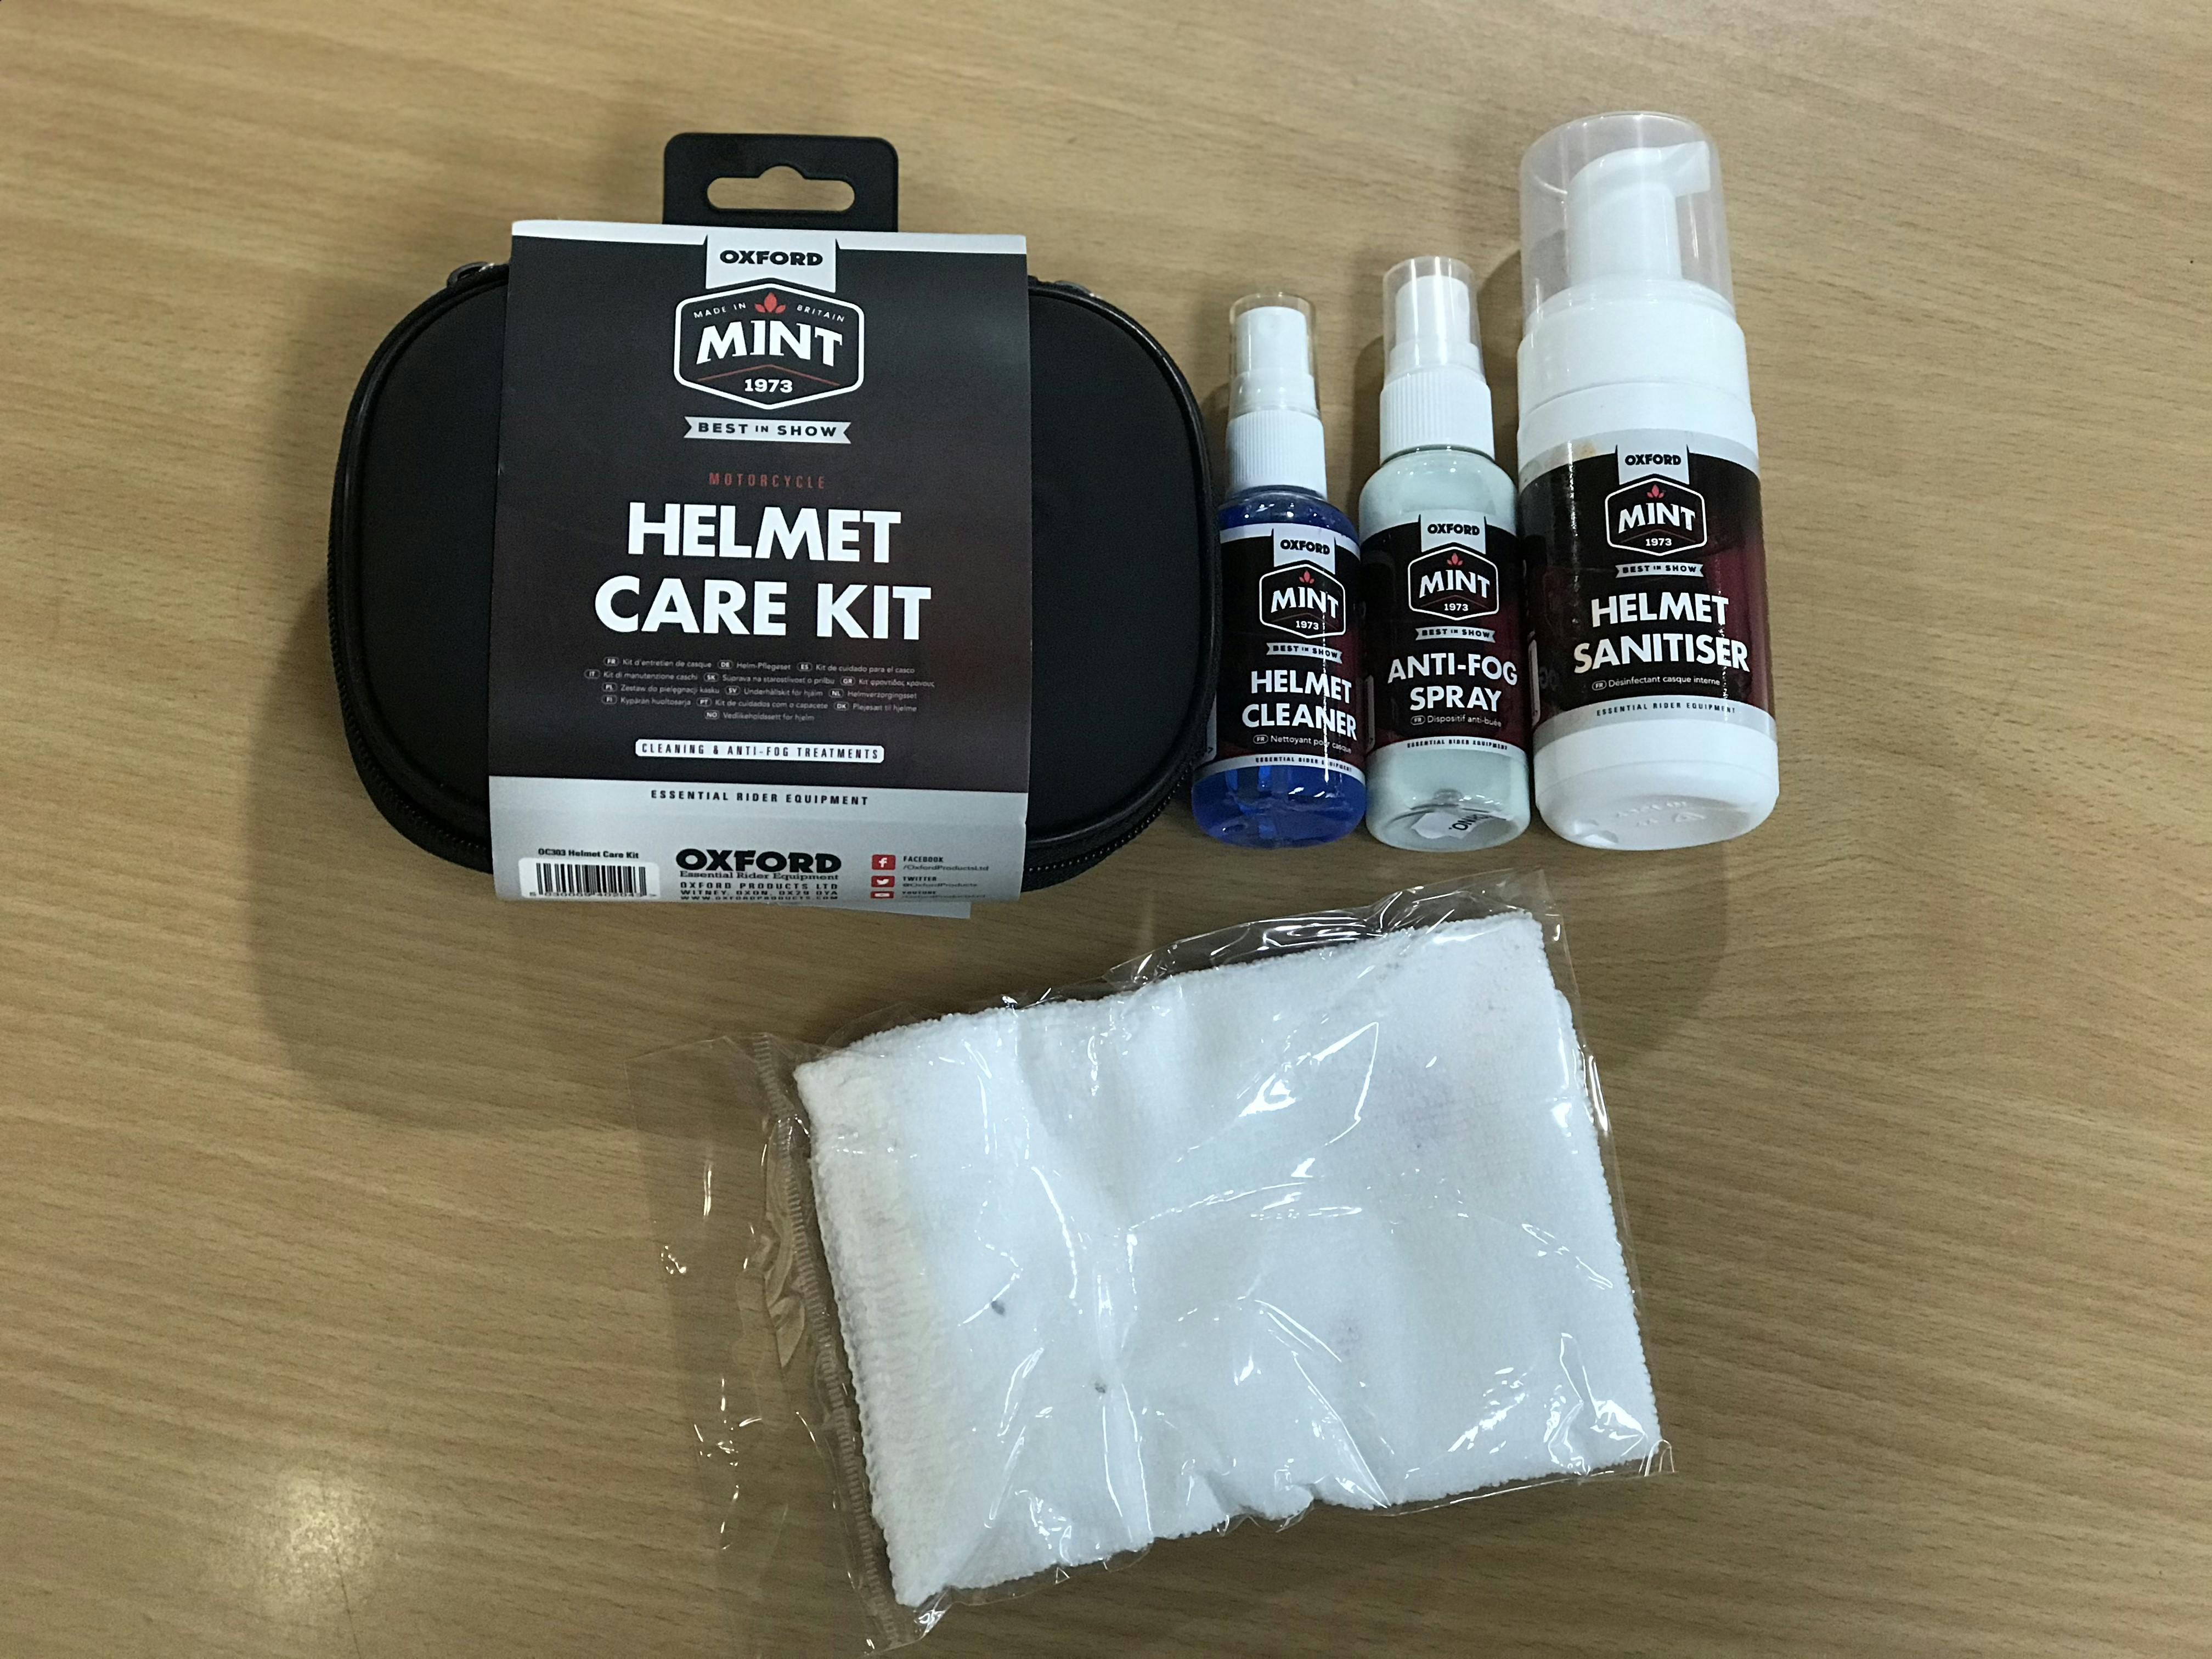 A Mint helmet care kit laid out